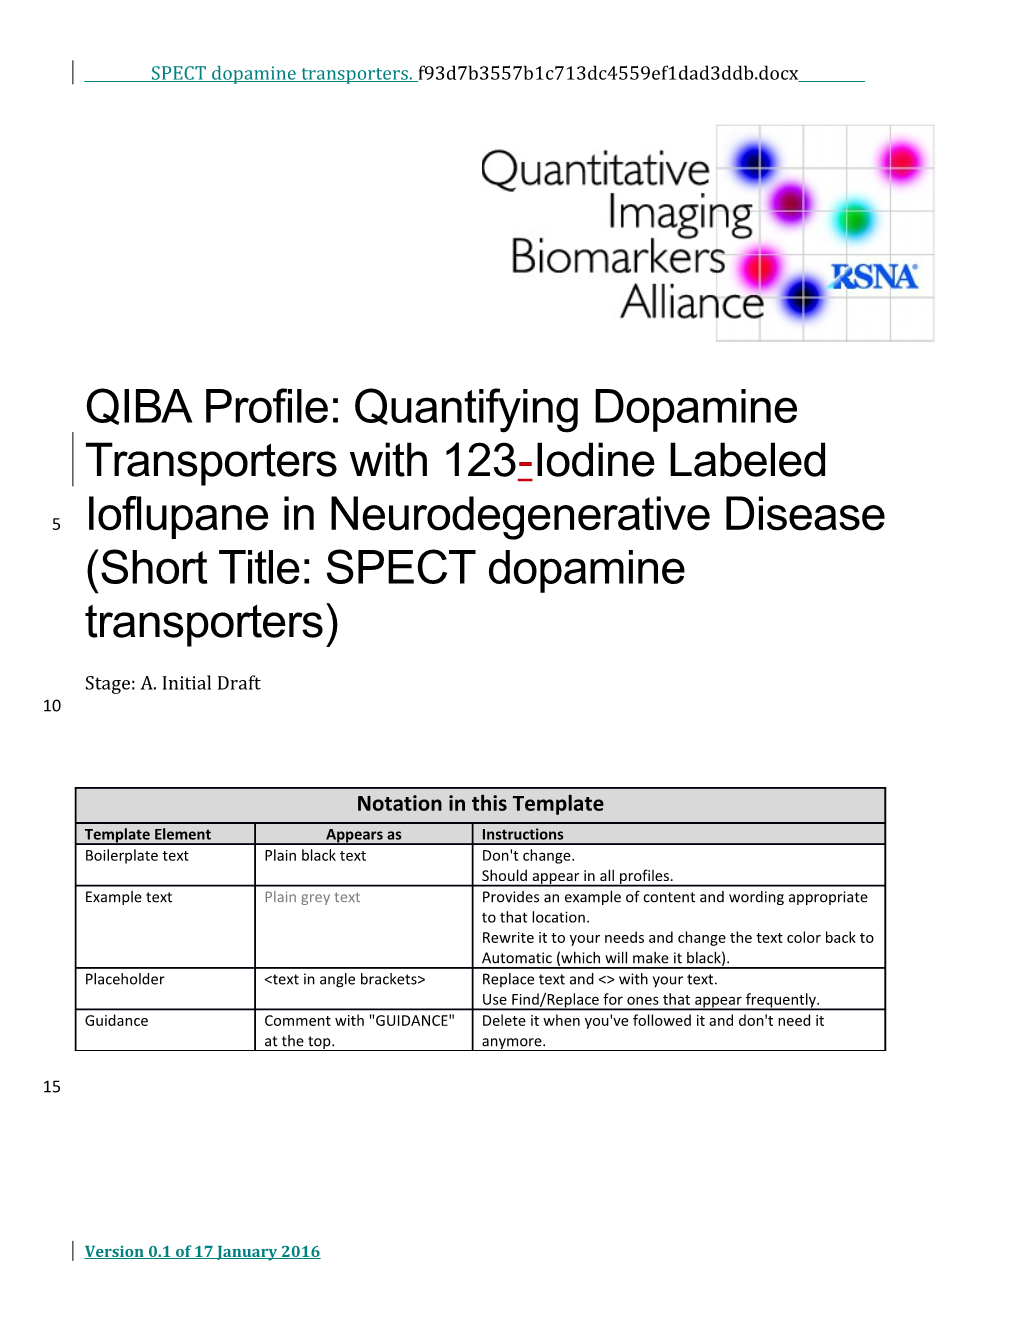 QIBA Profile: Quantifying Dopamine Transporters with 123-Iodine Labeled Ioflupane In